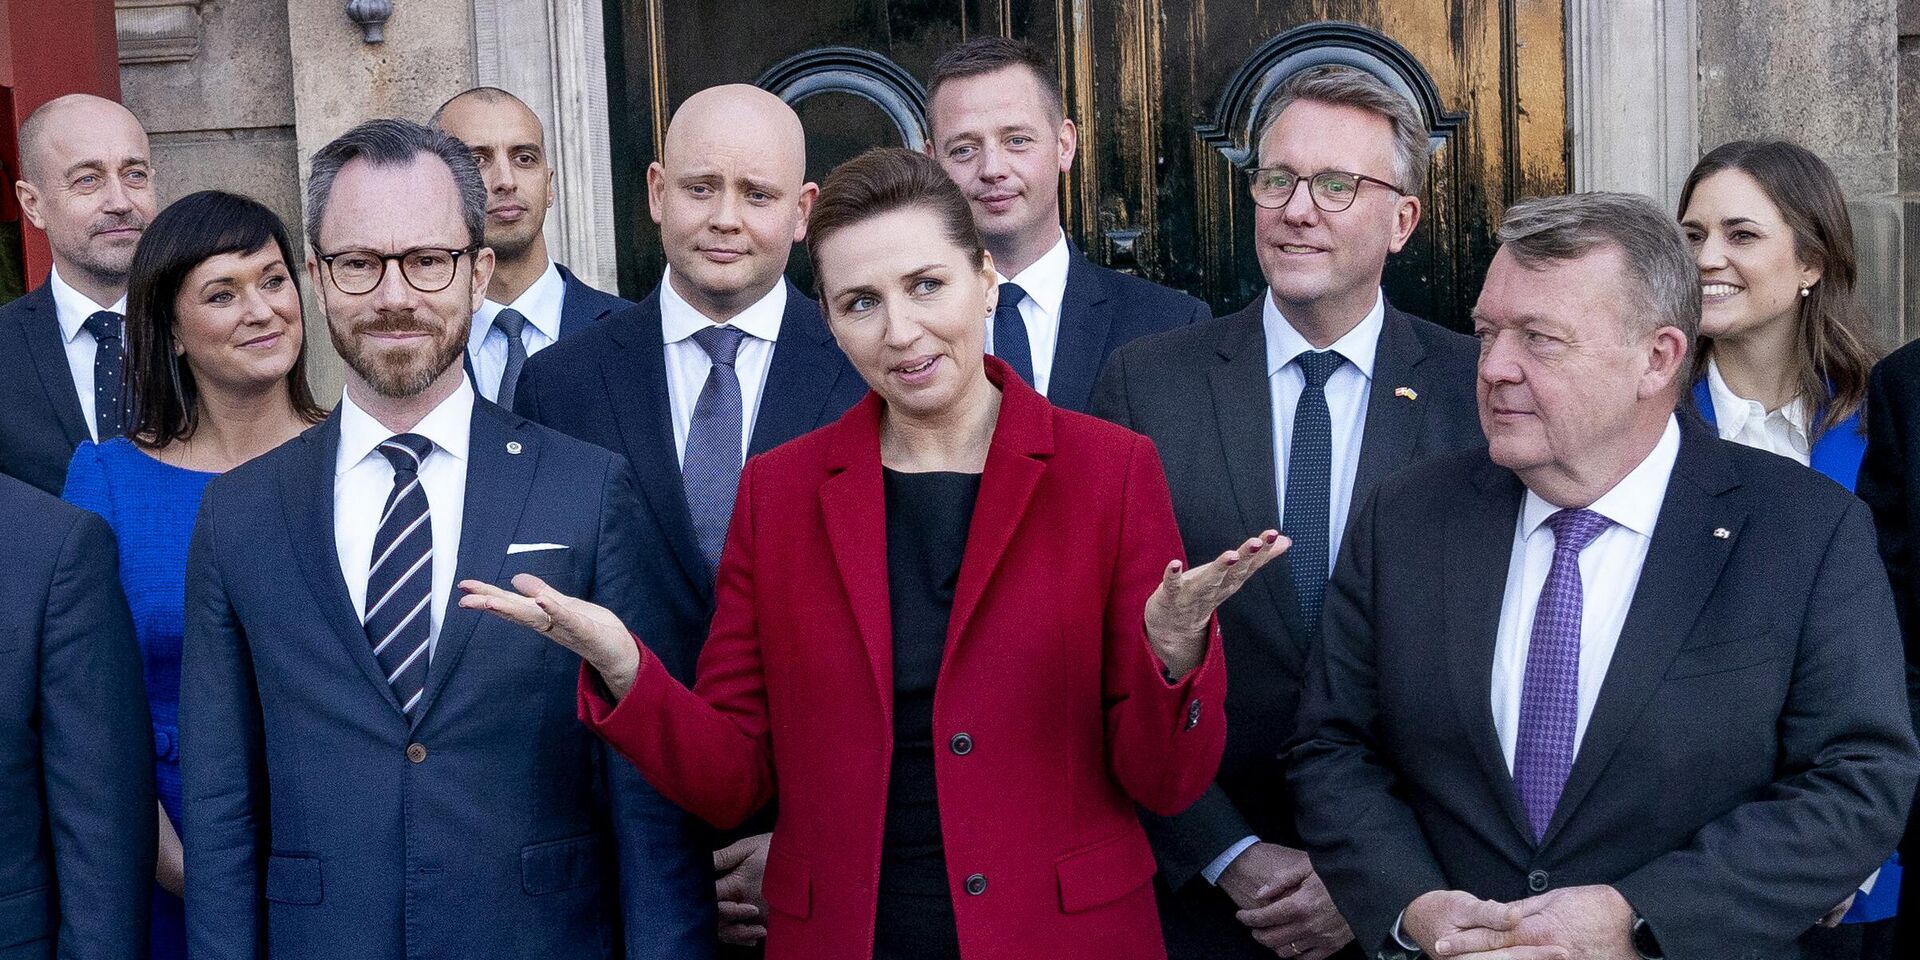 Премьер-министр Дании Метте Фредериксен (в центре) в Копенгагене, Дани. 15 декабря 2022 г. - ИноСМИ, 1920, 18.12.2022